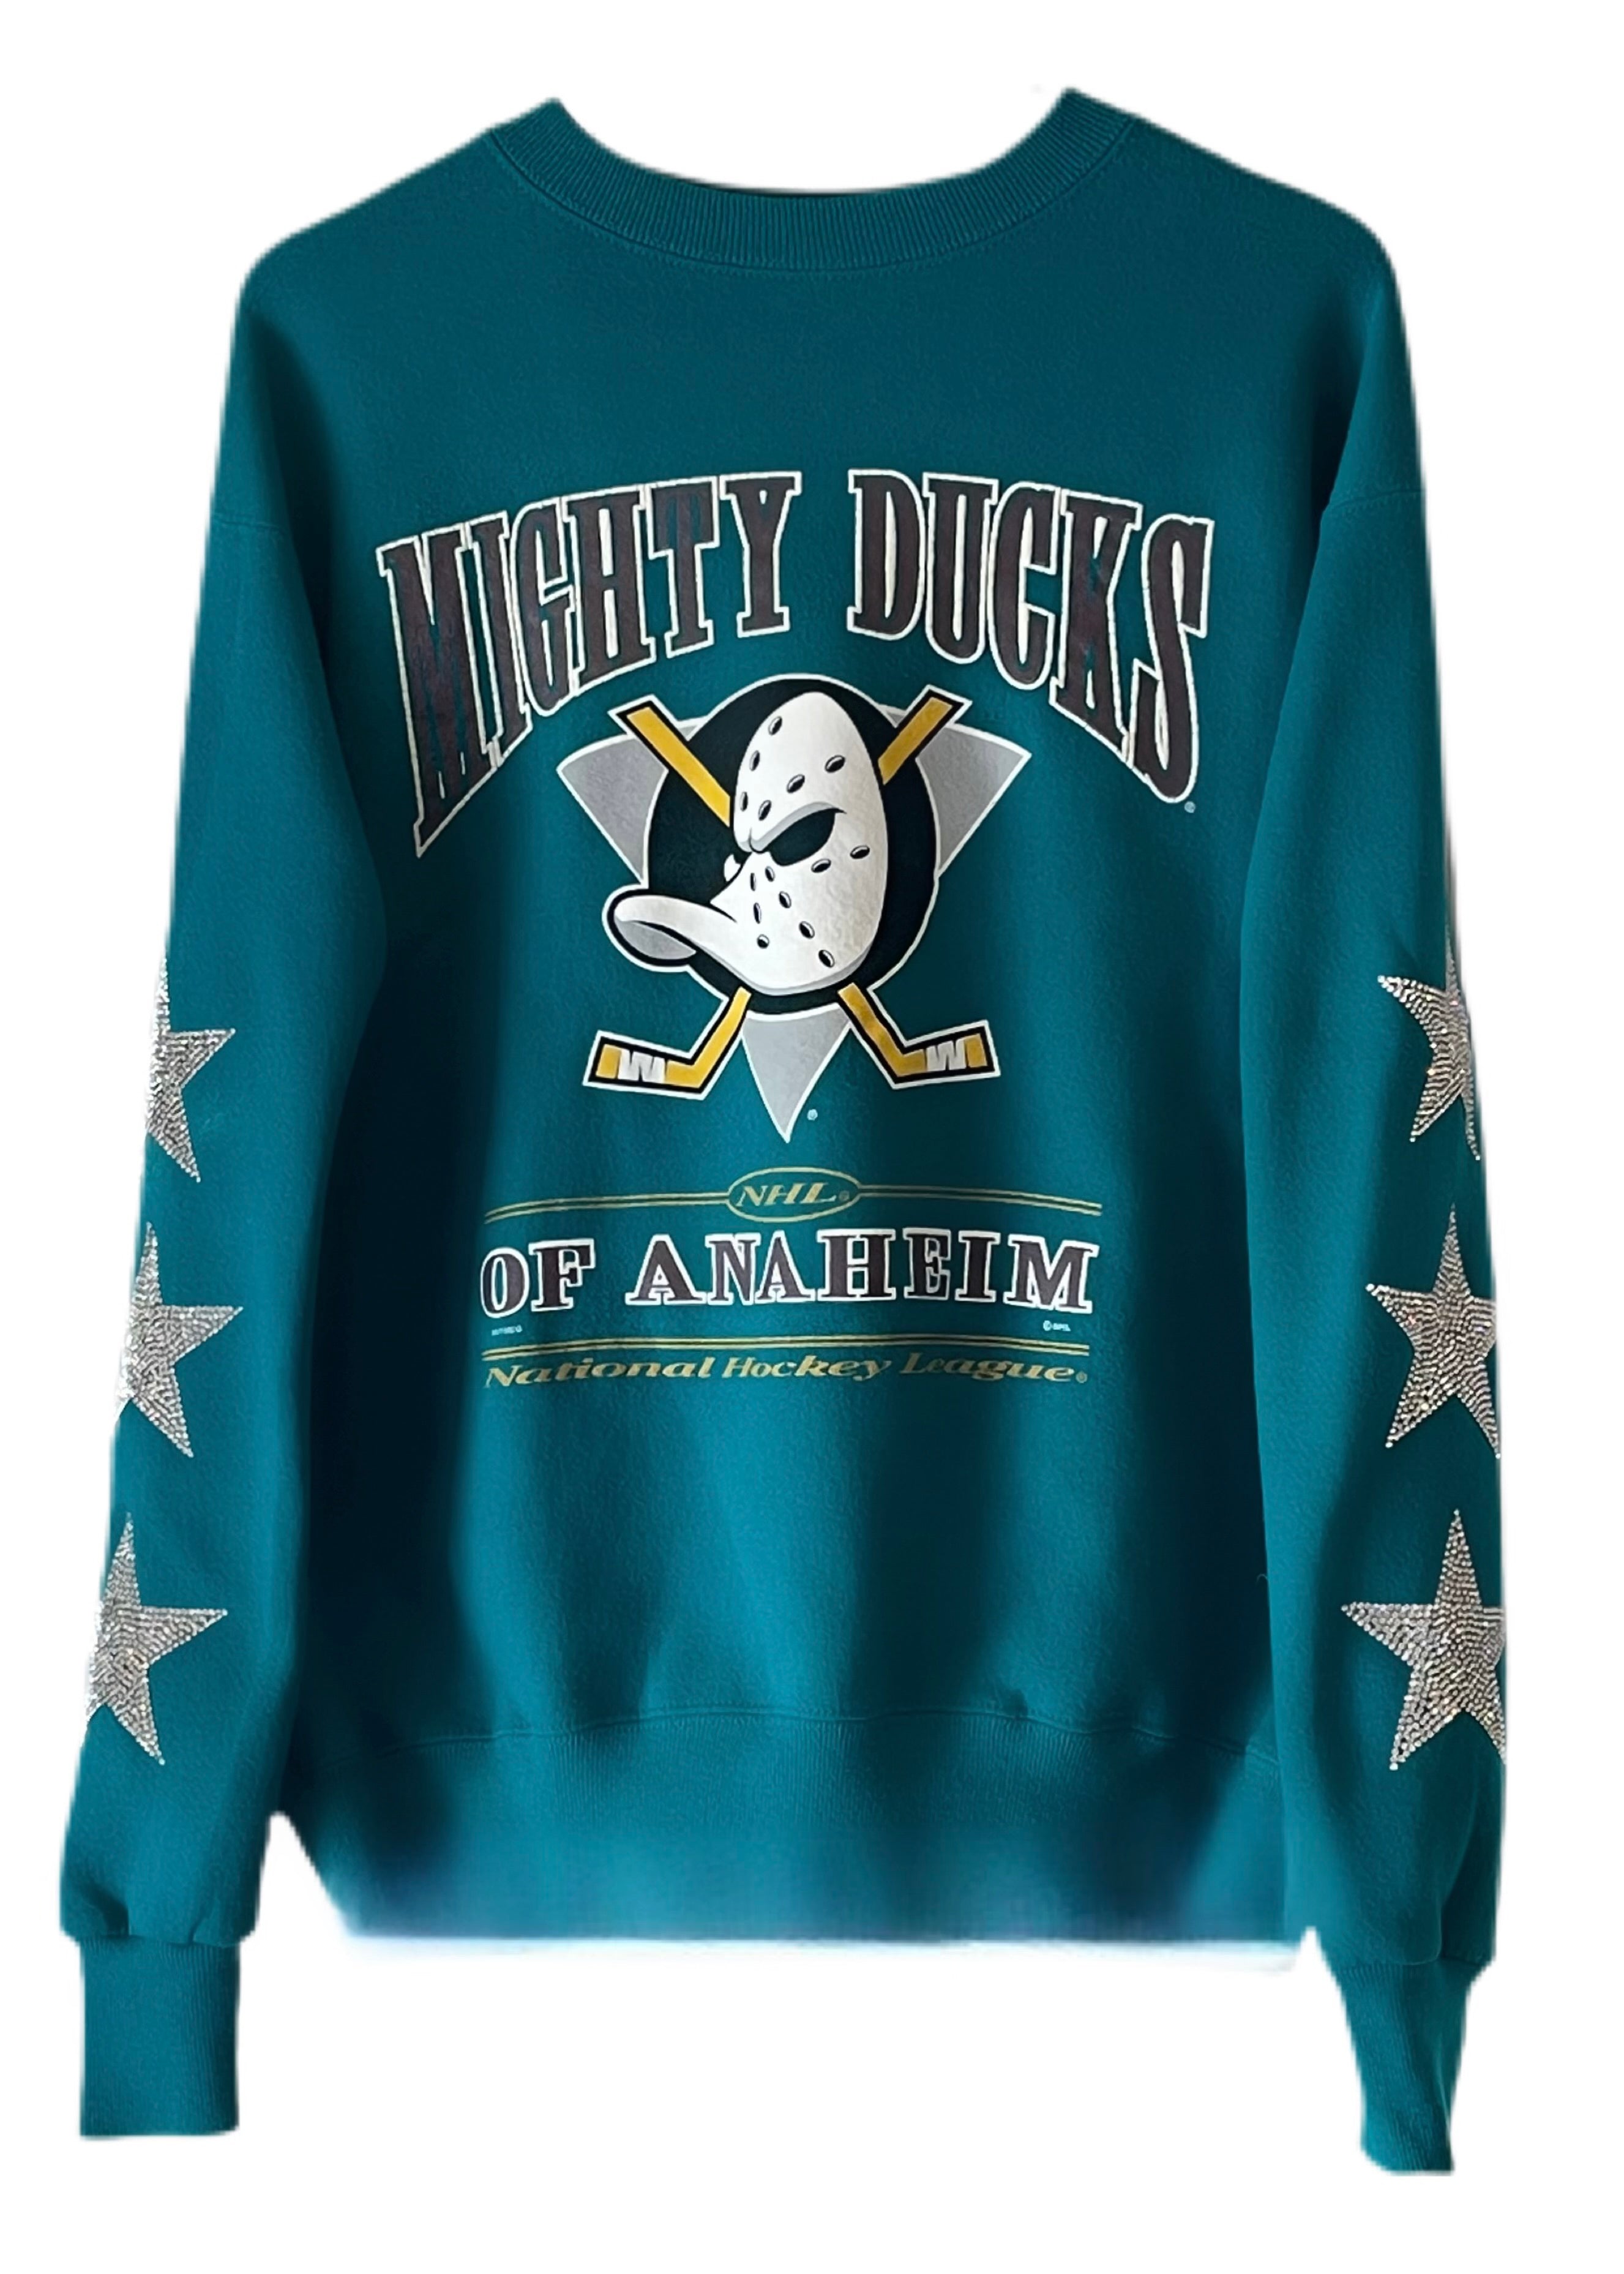 ShopCrystalRags Anaheim Ducks, NHL One of A Kind Vintage “Mighty Ducks” Sweatshirt with Crystal Star Design